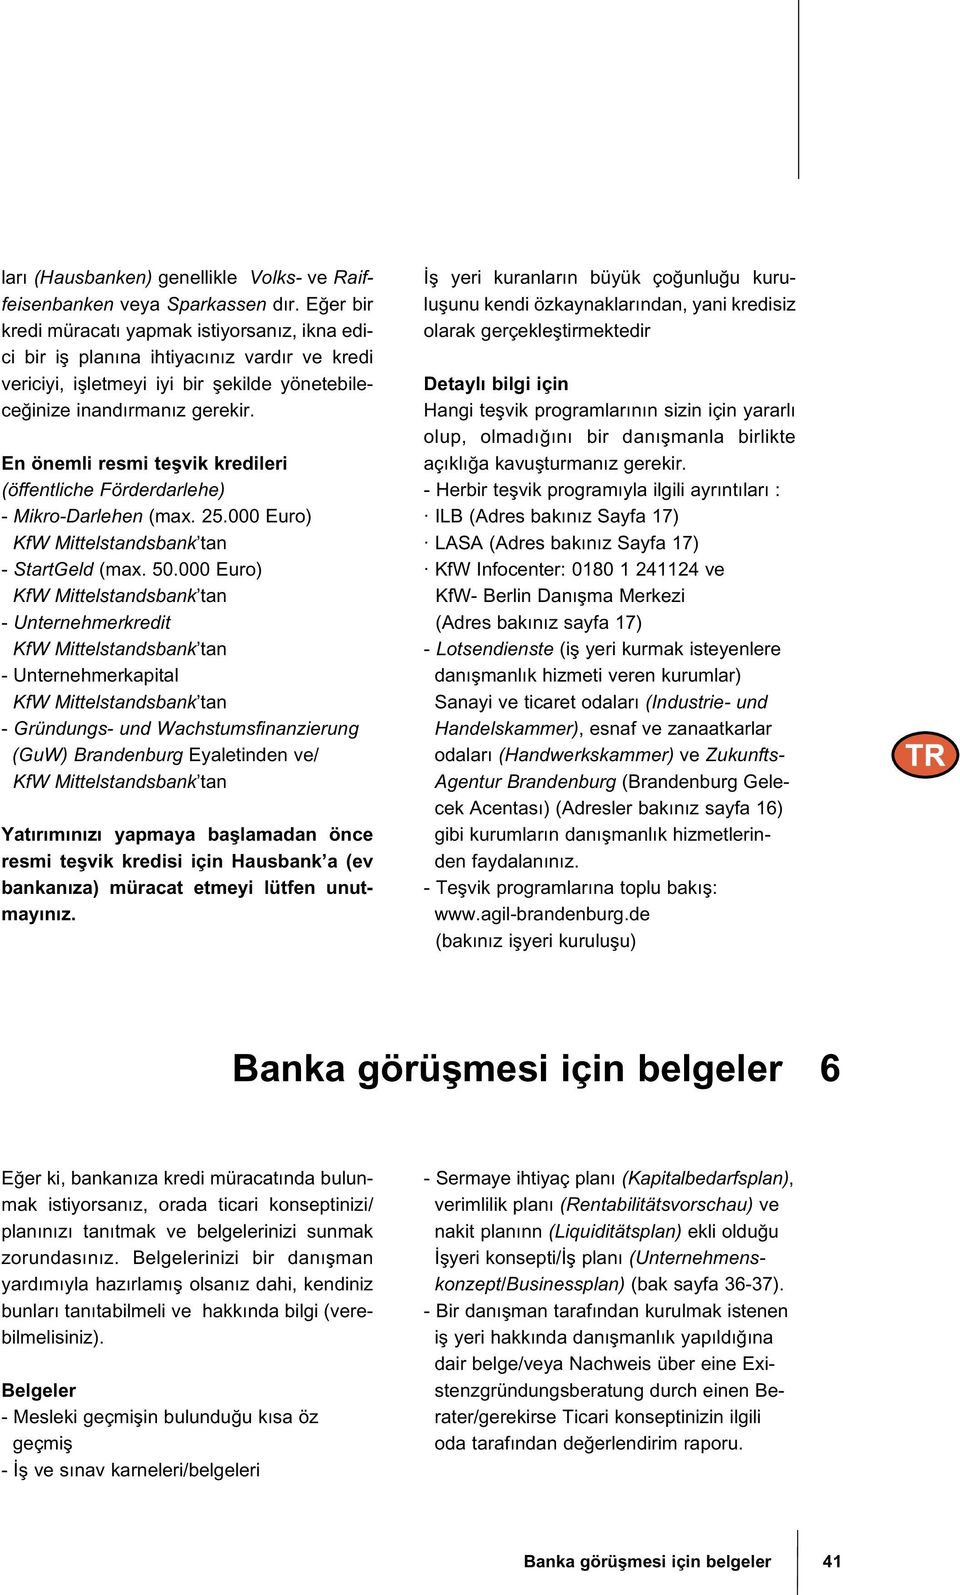 En önemli resmi te vik kredileri (öffentliche Förderdarlehe) - Mikro-Darlehen (max. 25.000 Euro) KfW Mittelstandsbank tan - StartGeld (max. 50.